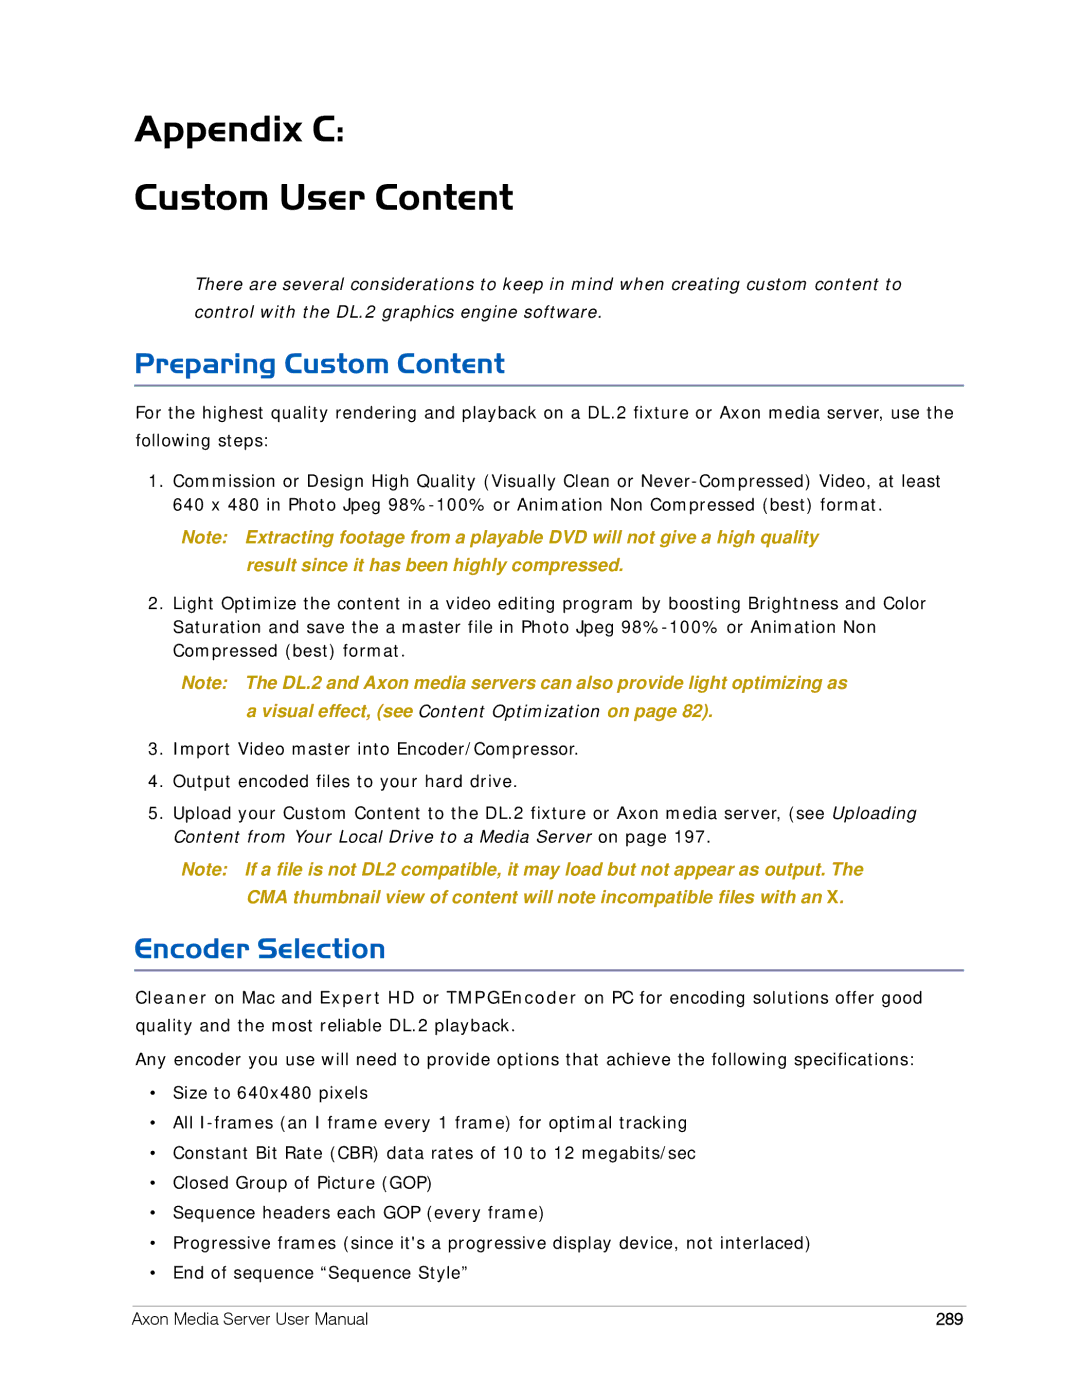 High End Systems DL.2 user manual Appendix C Custom User Content, Preparing Custom Content, Encoder Selection, 289 